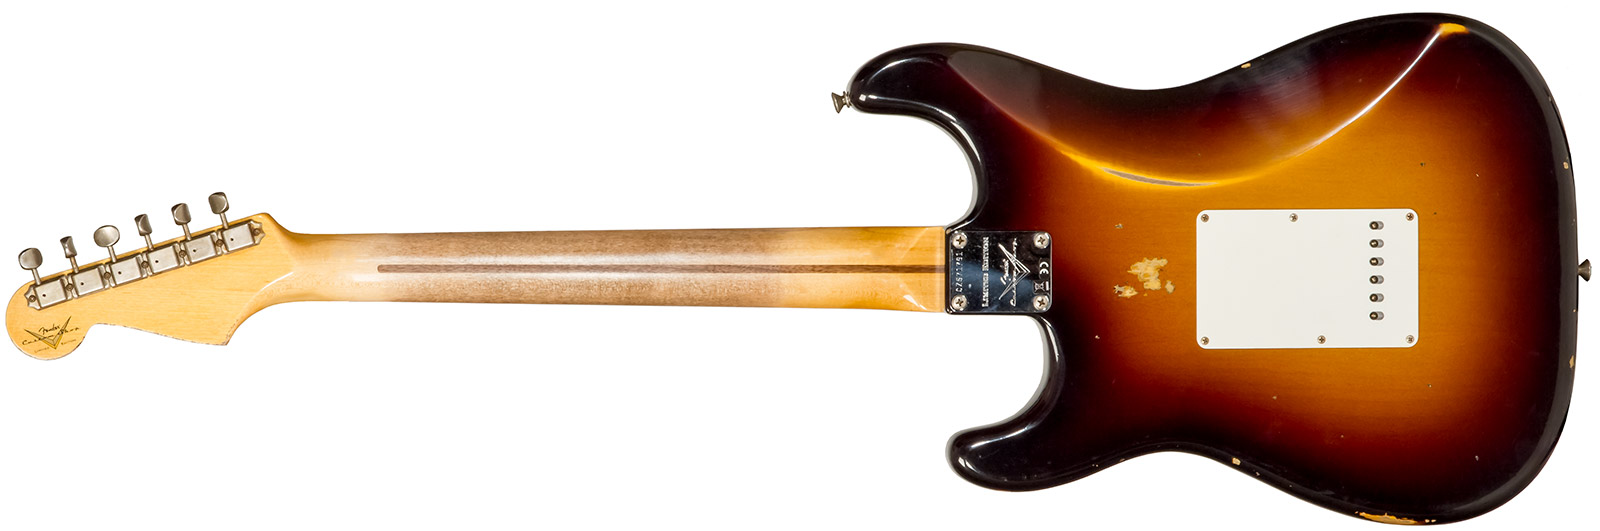 Fender Custom Shop Strat 1957 3s Trem Mn #cz571791 - Relic Wide Fade 2-color Sunburst - Guitarra eléctrica con forma de str. - Variation 1